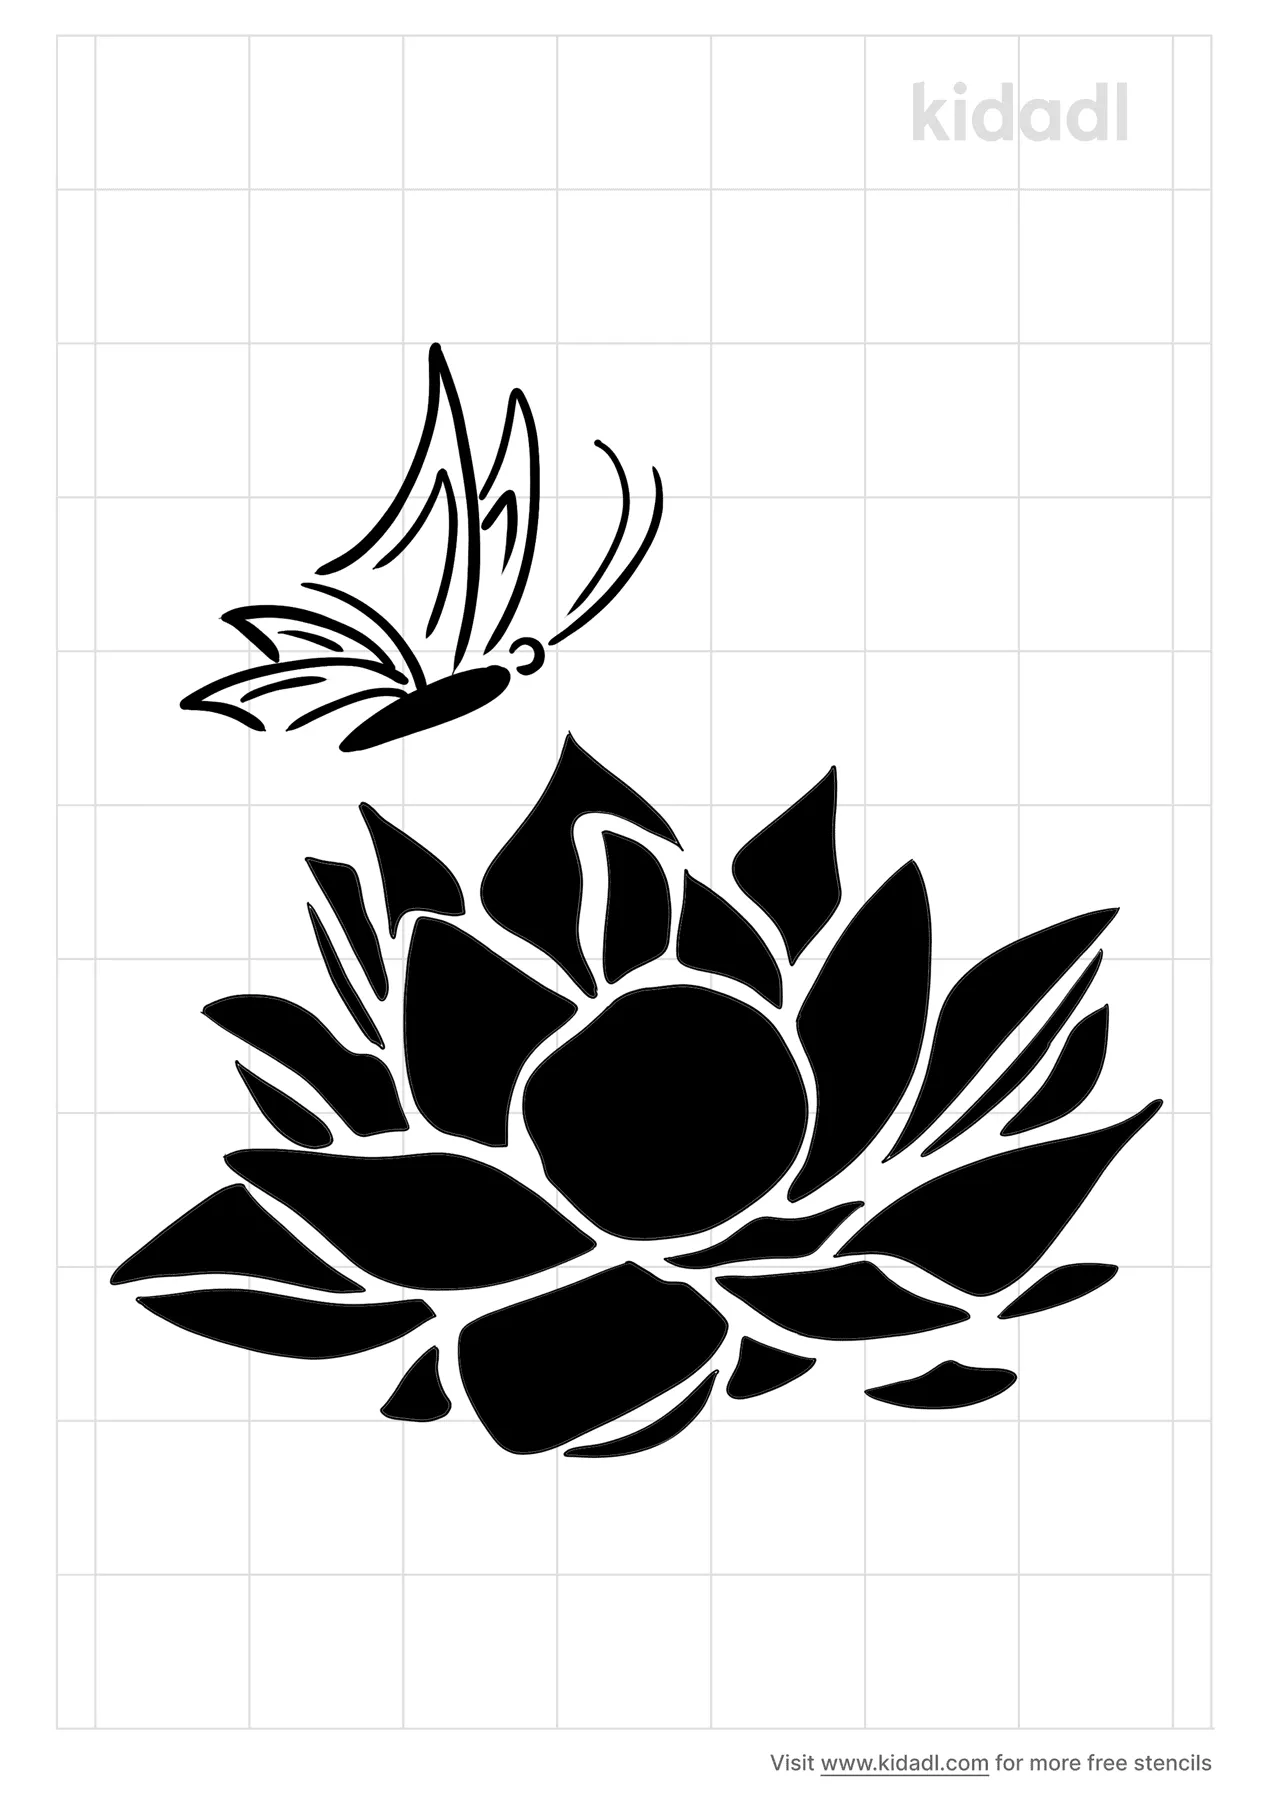 Lotus Butterfly Stencils Free Printable Flowers Stencils Kidadl And Flowers Stencils Free Printable Stencils Kidadl